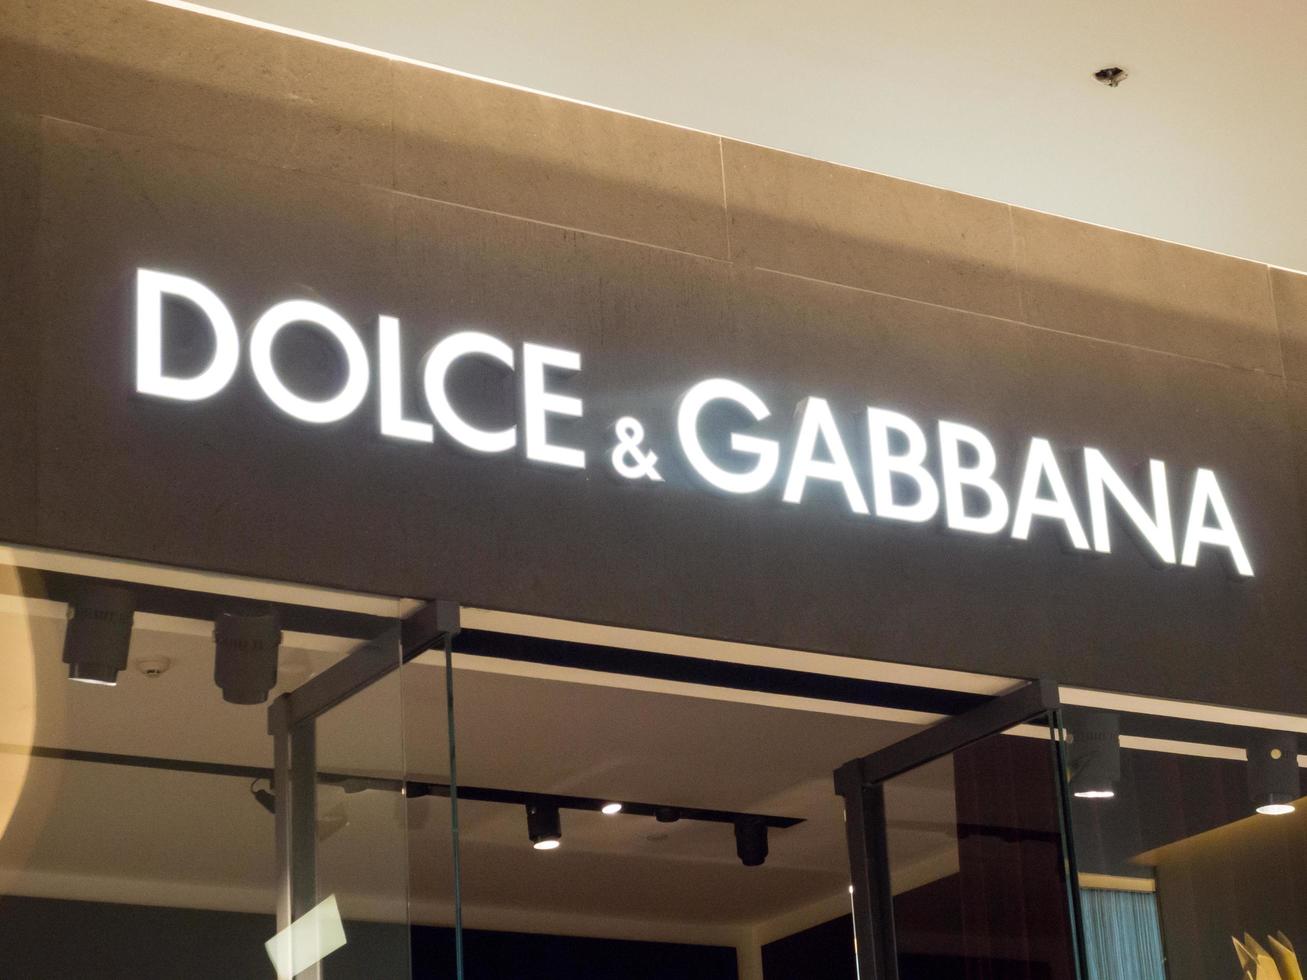 dolce gabbana butiker i siam paragon bangkok thailand23 november 2018butiken ligger på siam paragon shoppingcenter. på bangkok thailand23 november 2018 foto